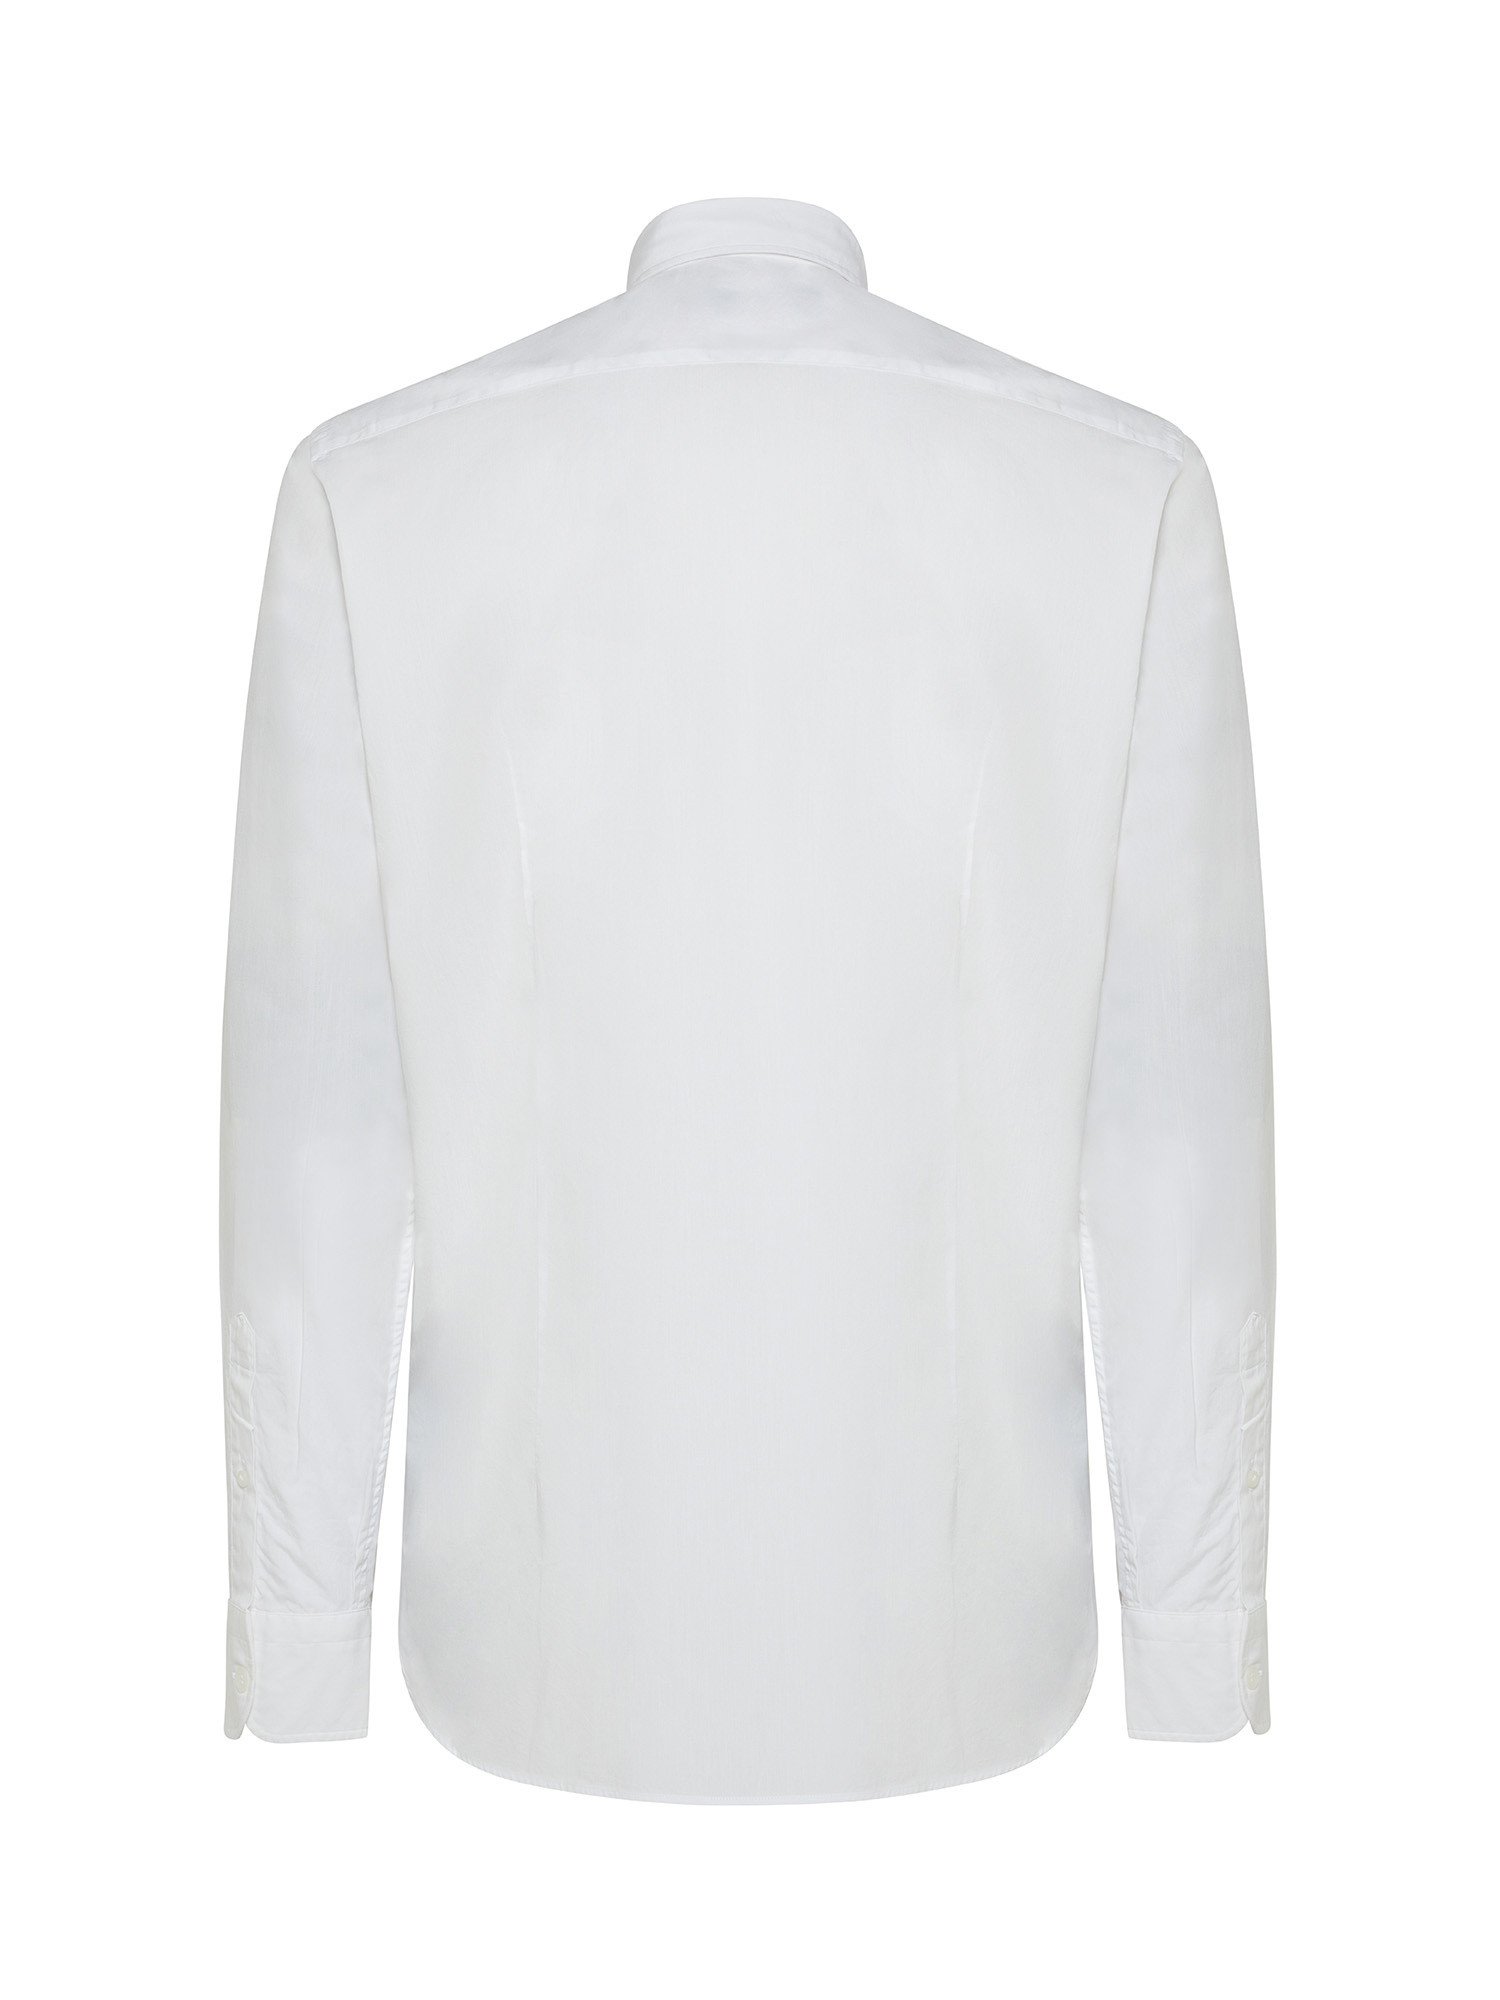 Luca D'Altieri - Camicia slim fit in puro cotone, Bianco, large image number 1